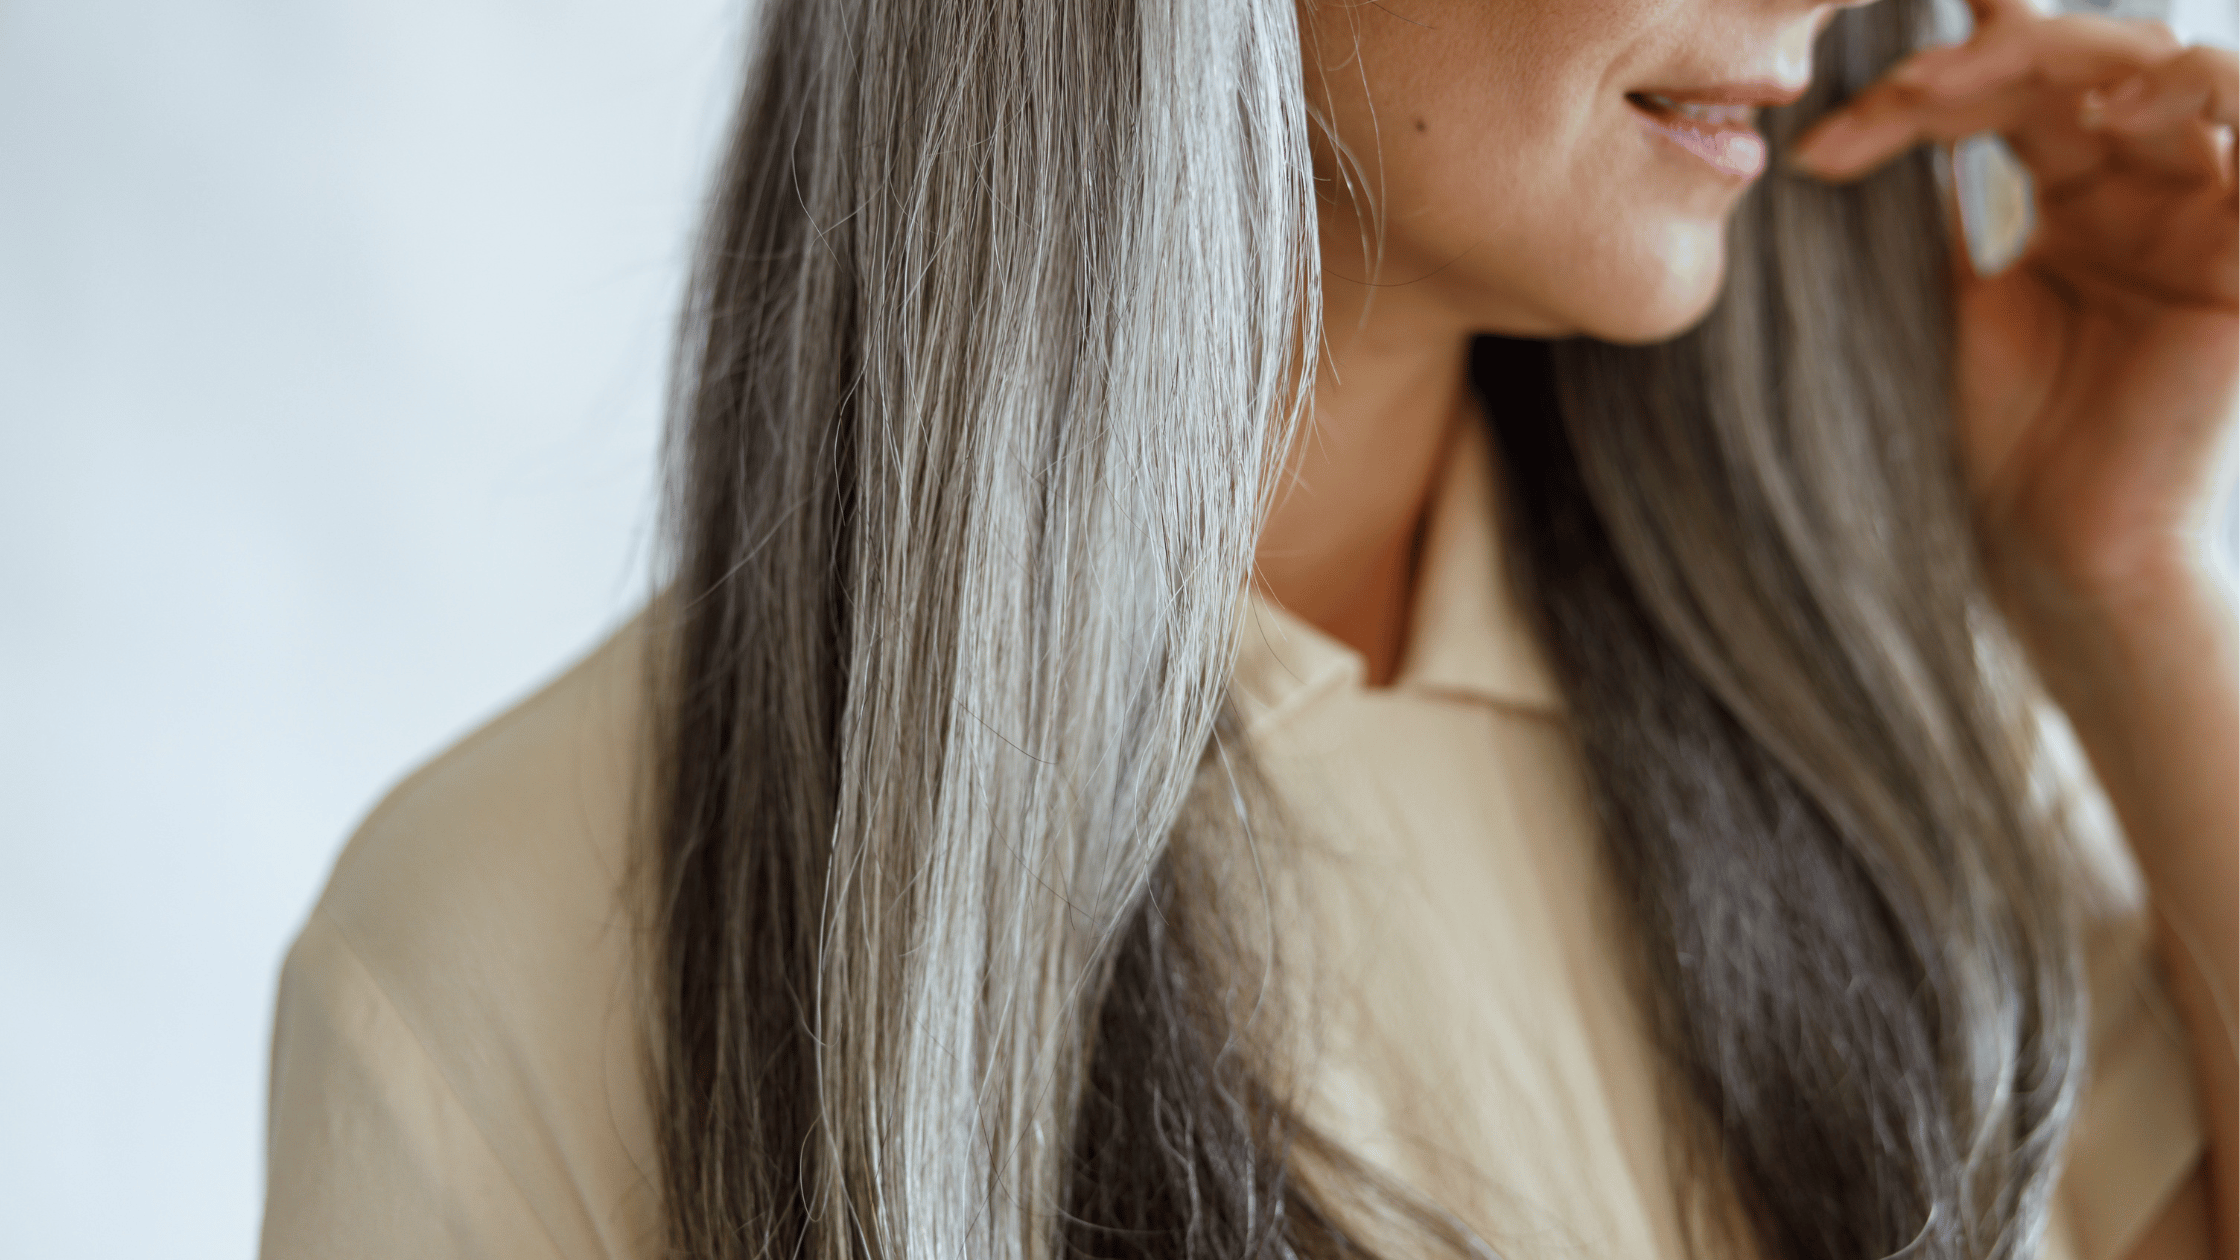 Can NMN reverse grey hair